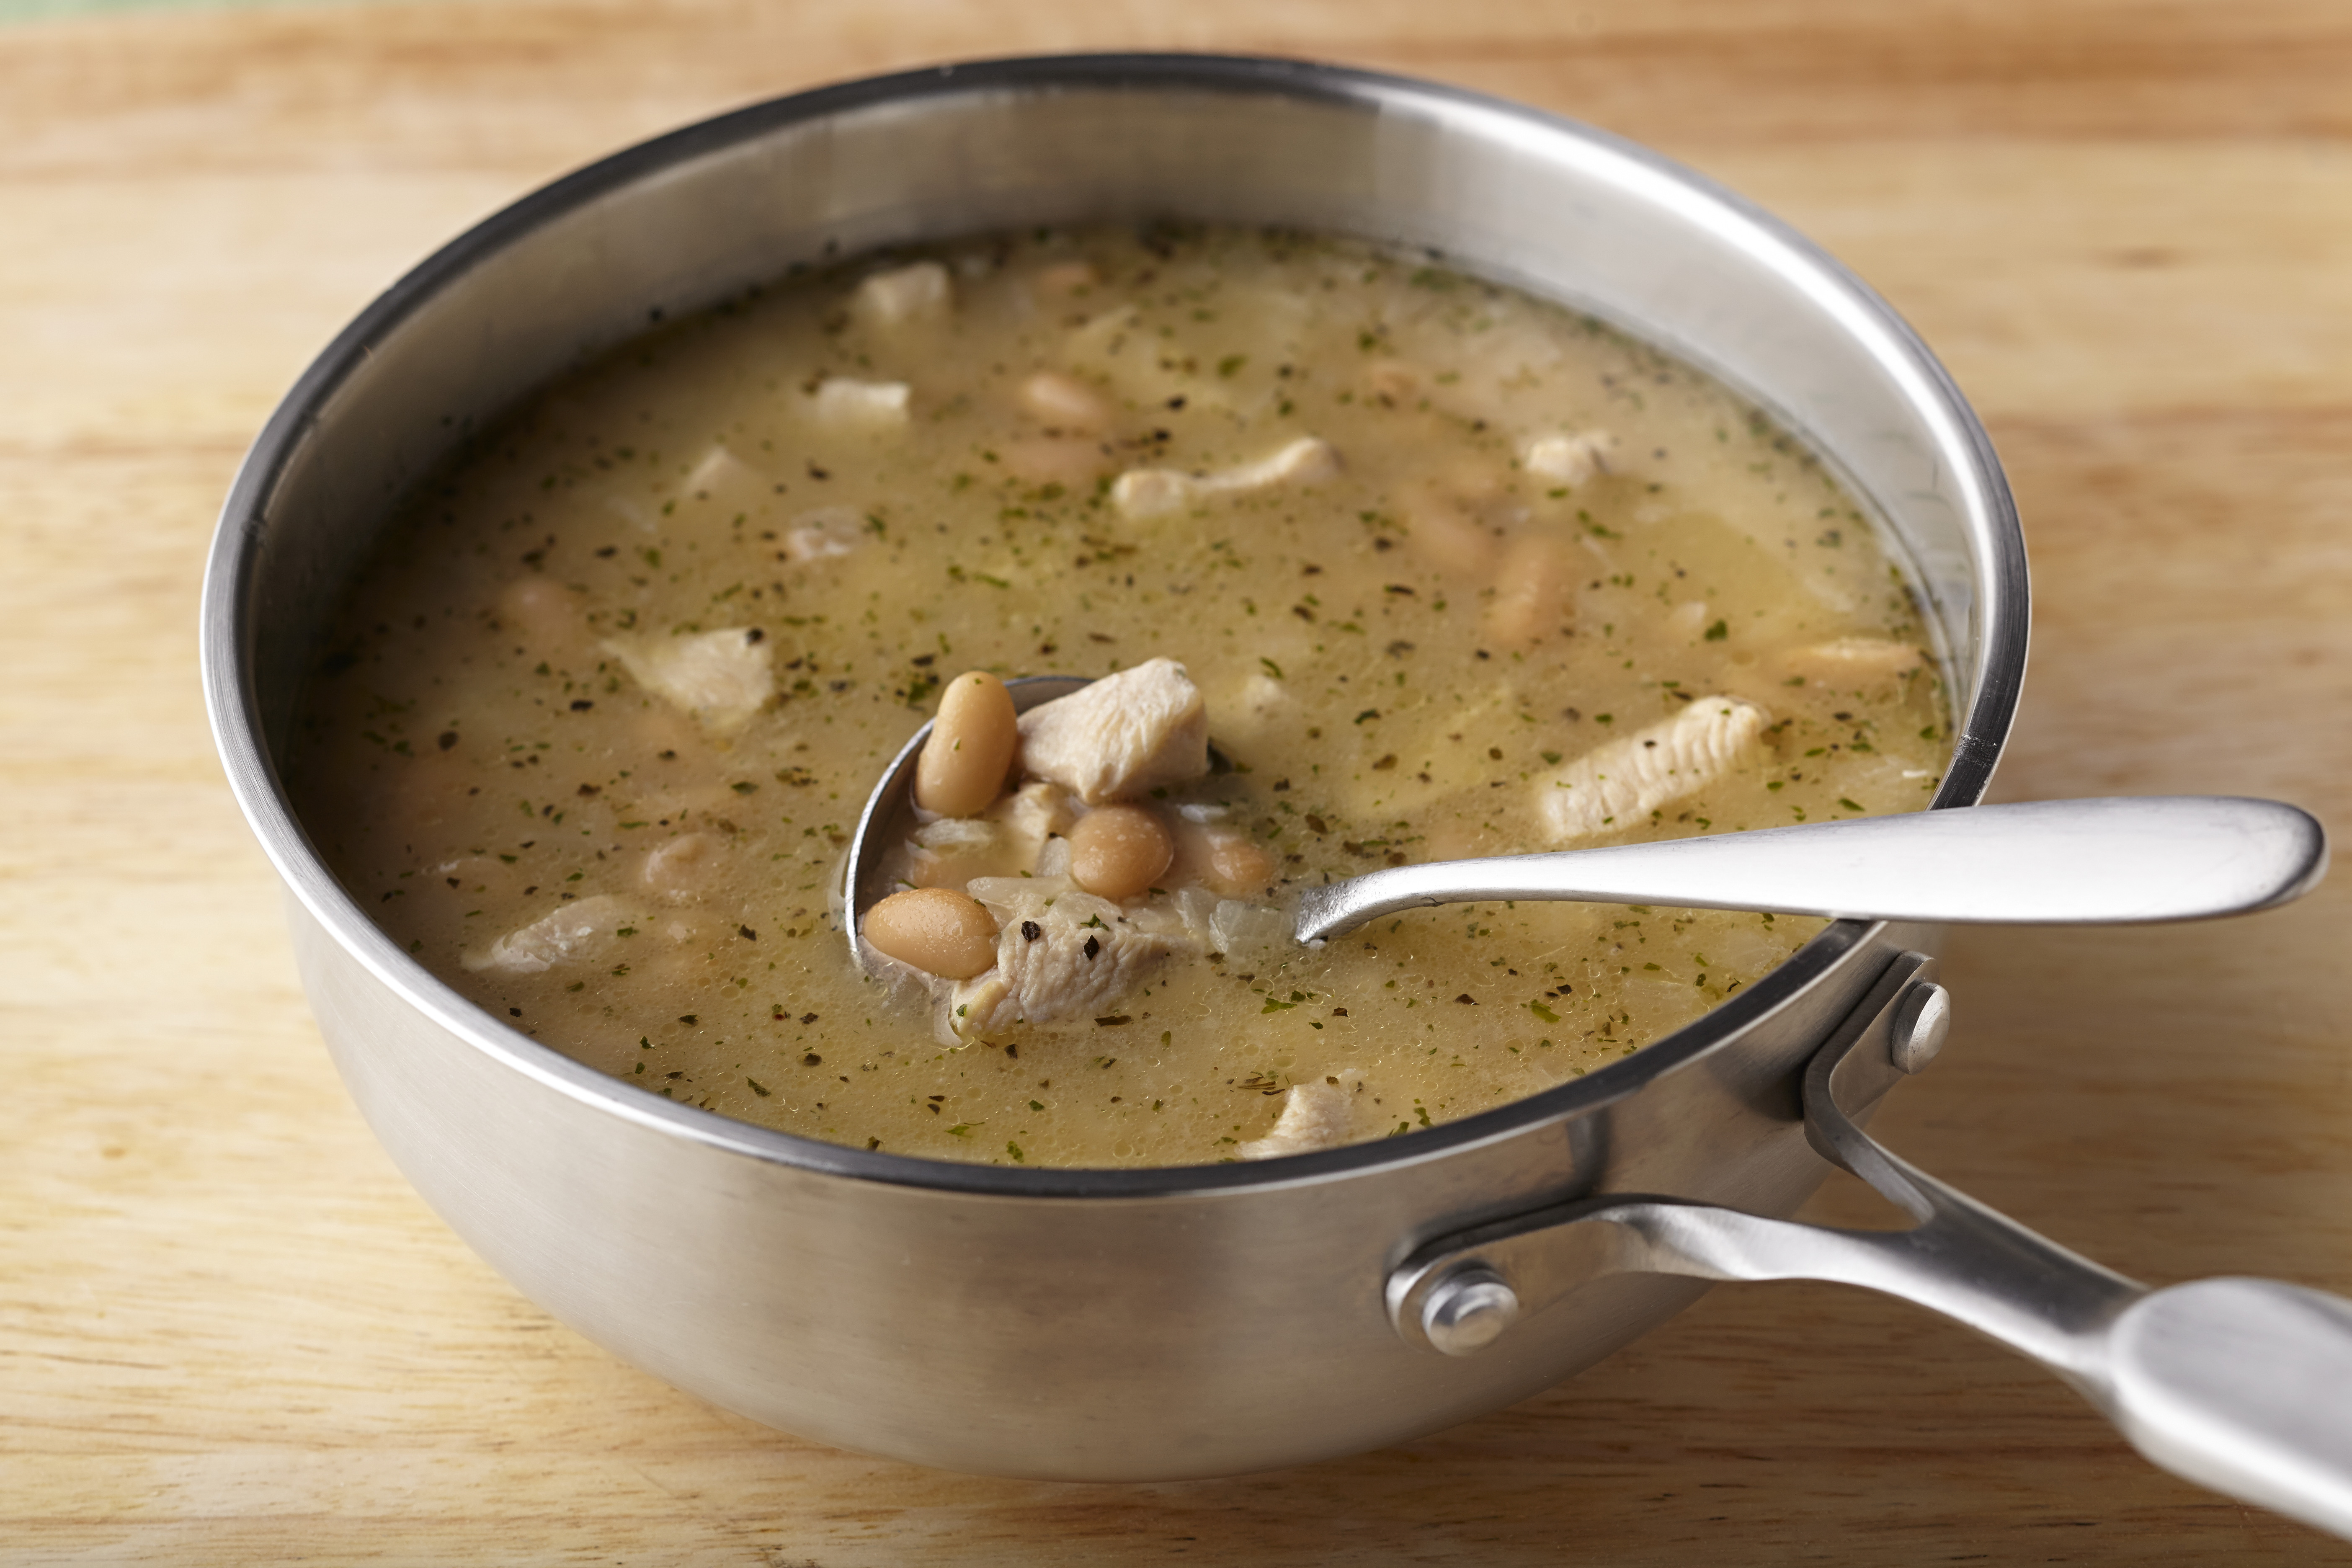 Easy Chicken Soup Recipe